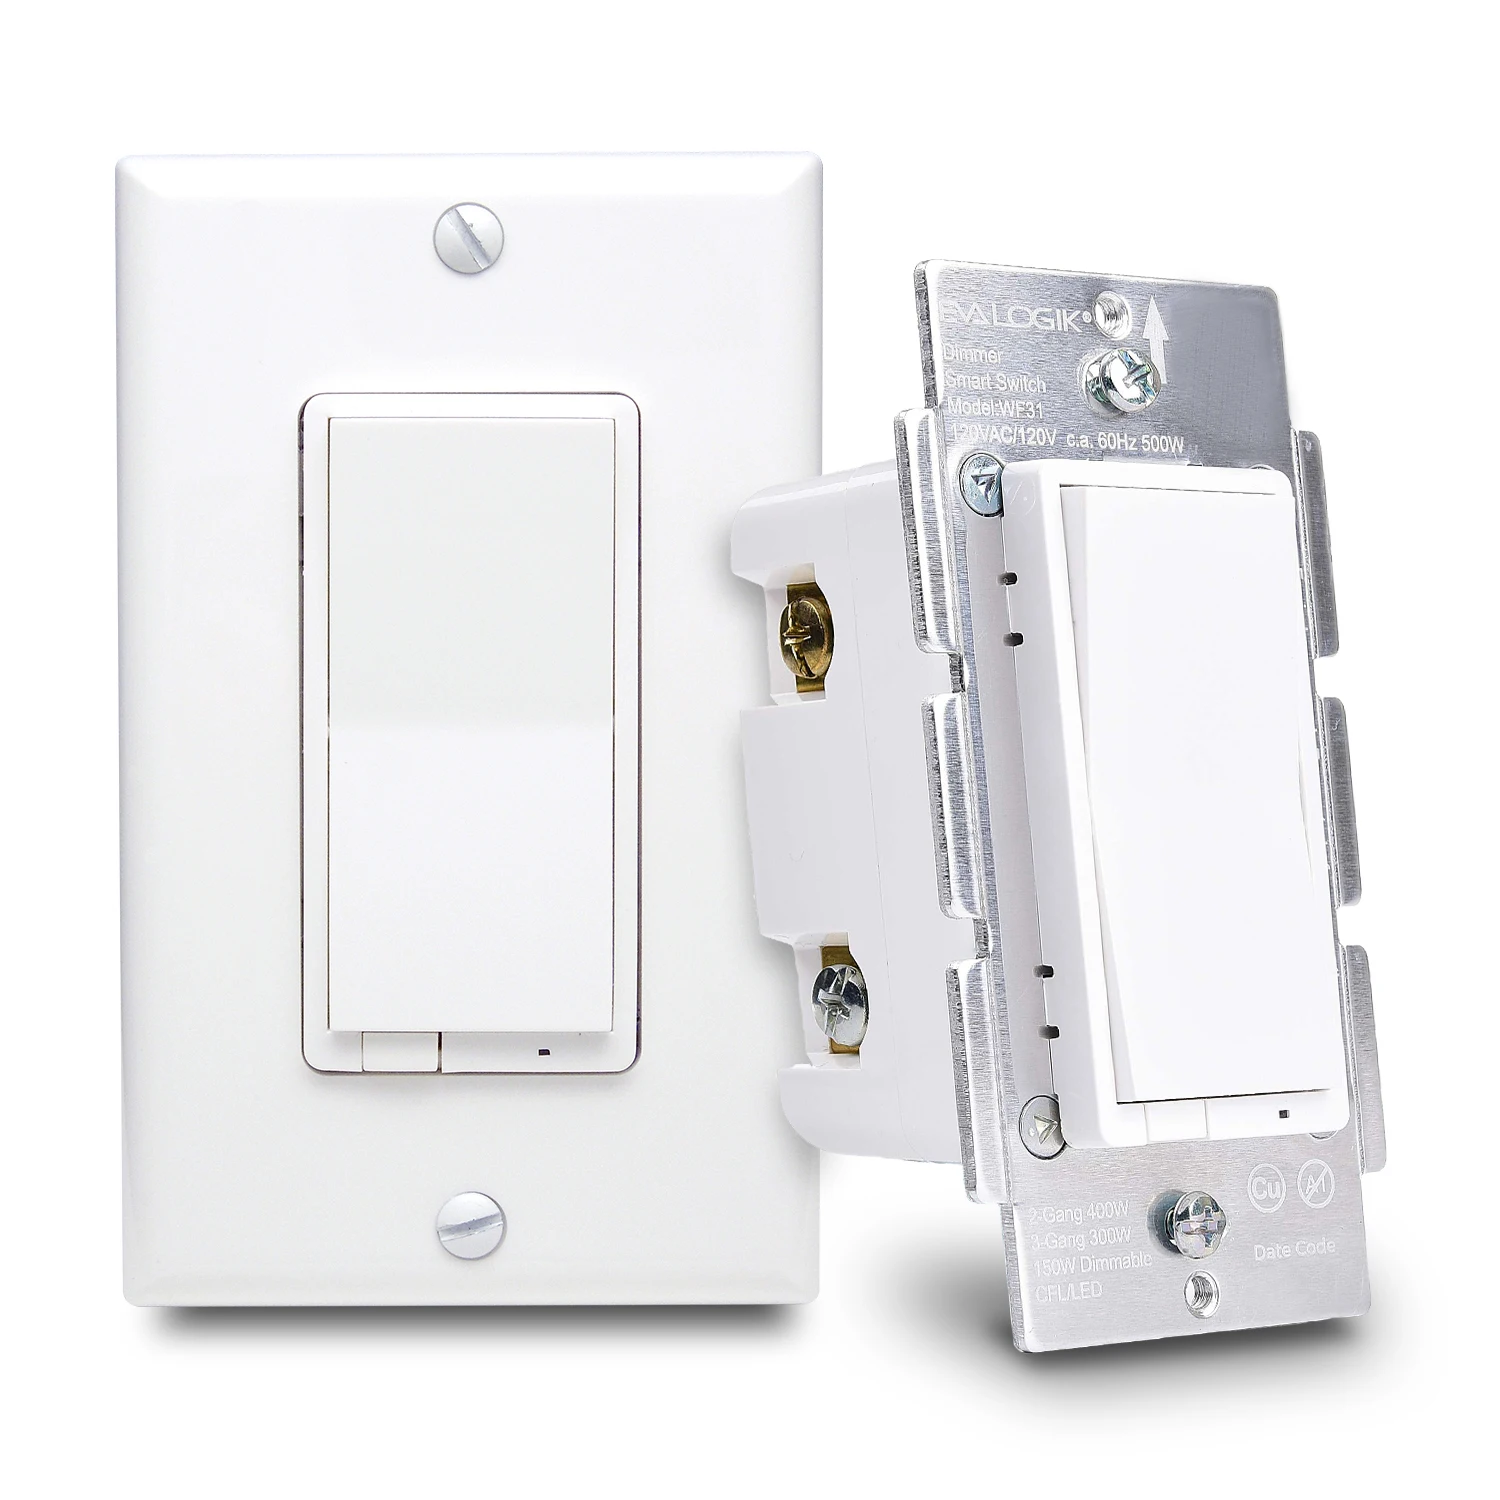 EVA LOGIK smart switch home automation dimmer light control wall switch 220v uk